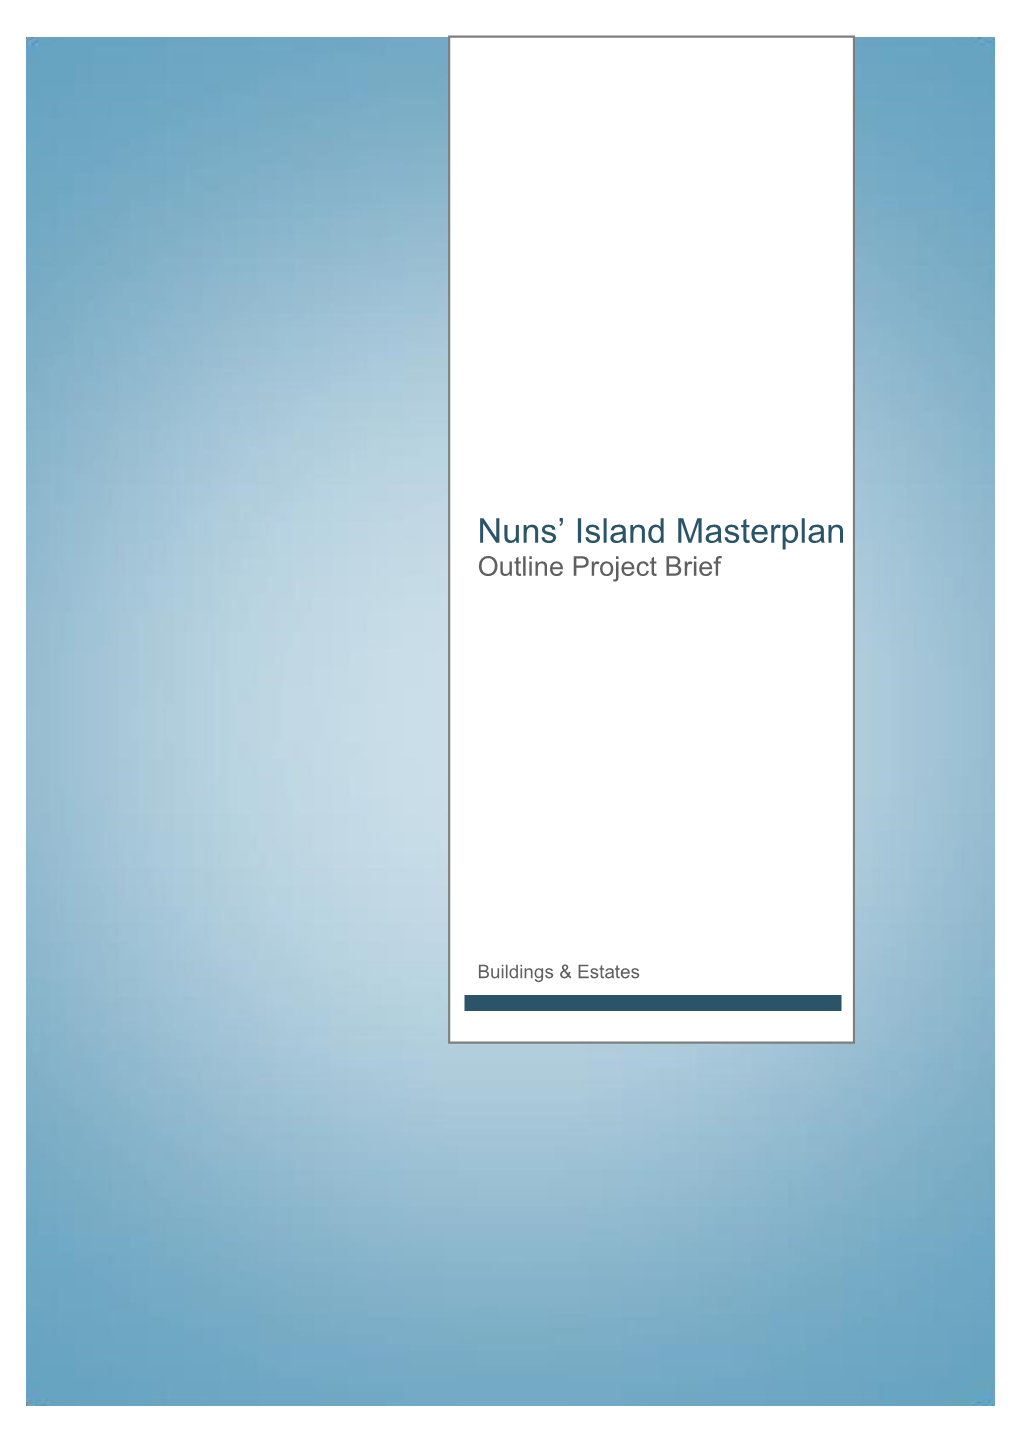 Nuns' Island Masterplan Design Brief